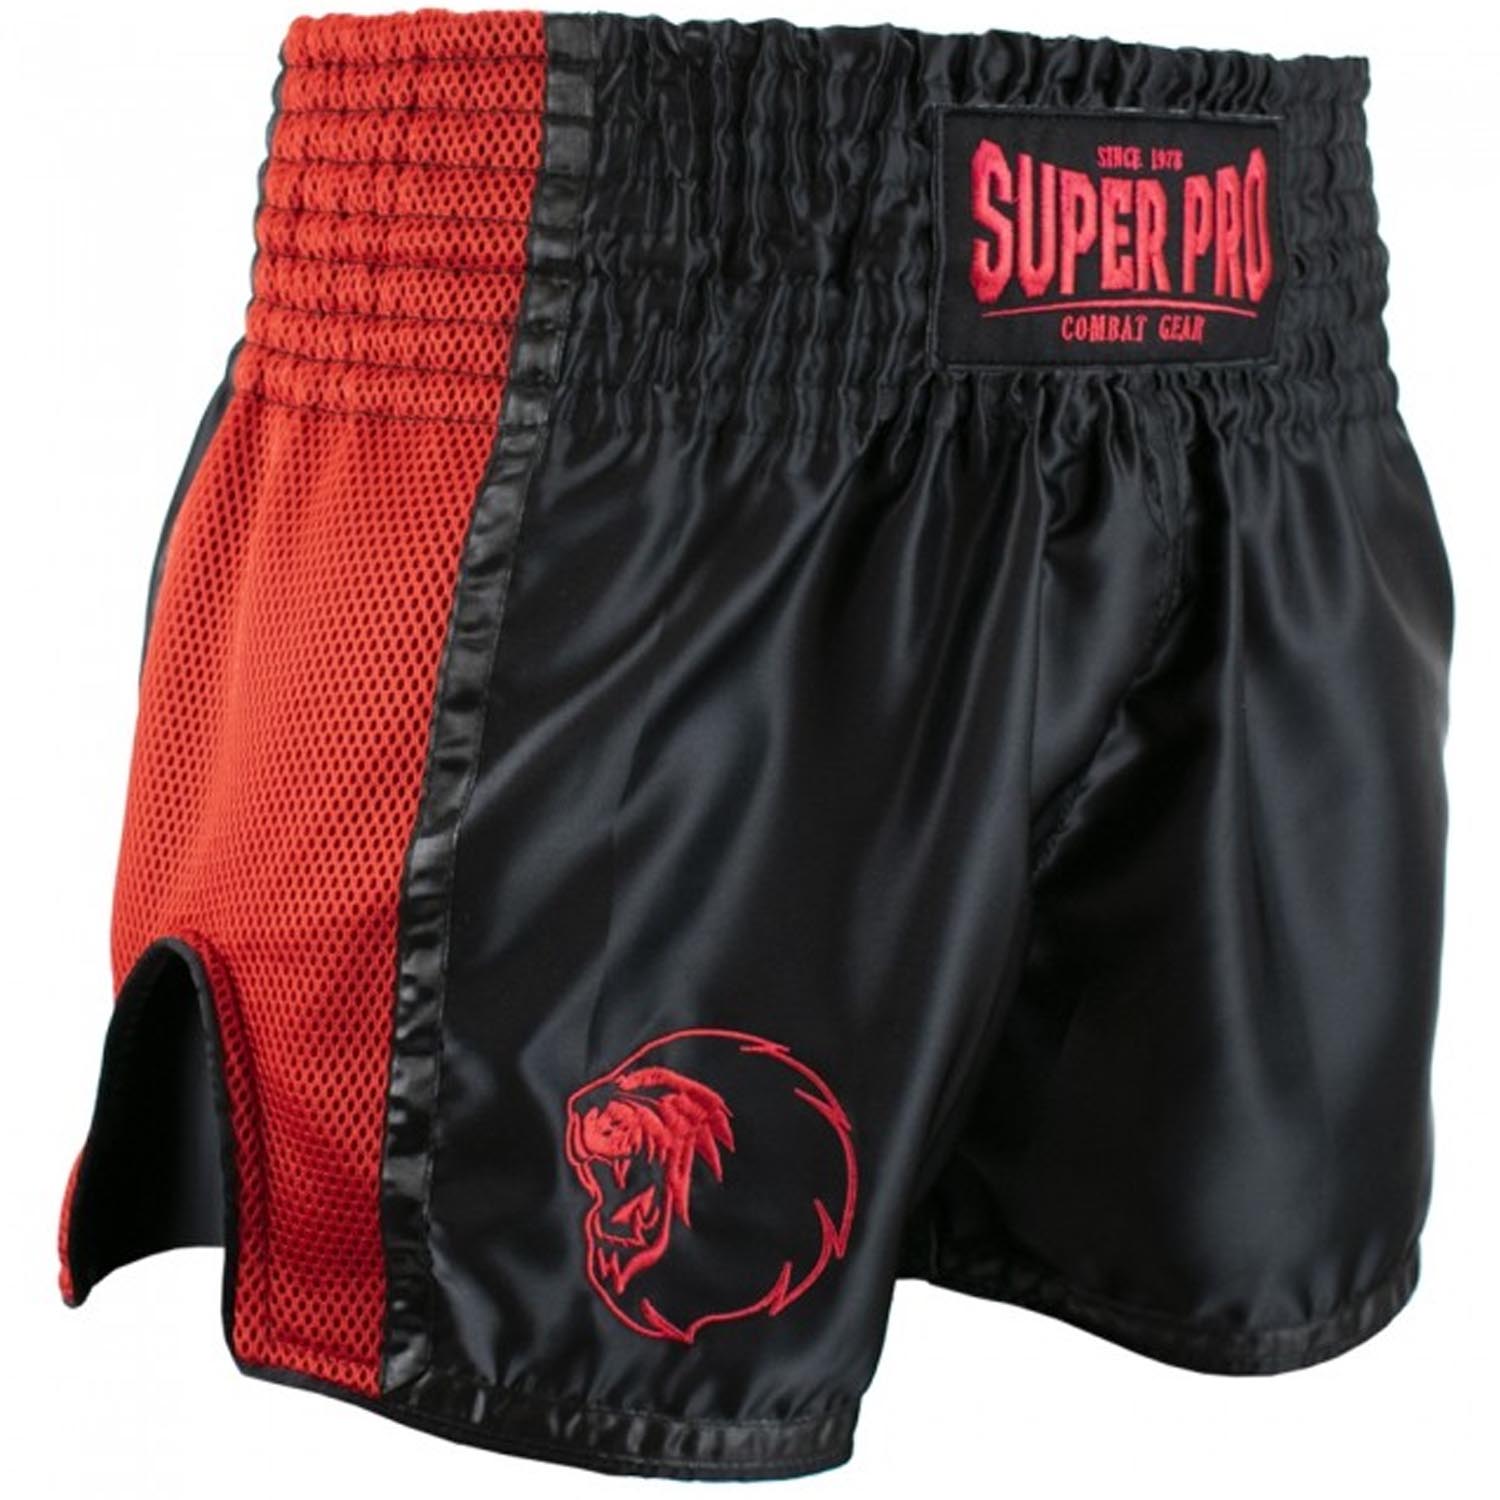 Super Pro Muay Thai Shorts, Brave, schwarz-rot, S